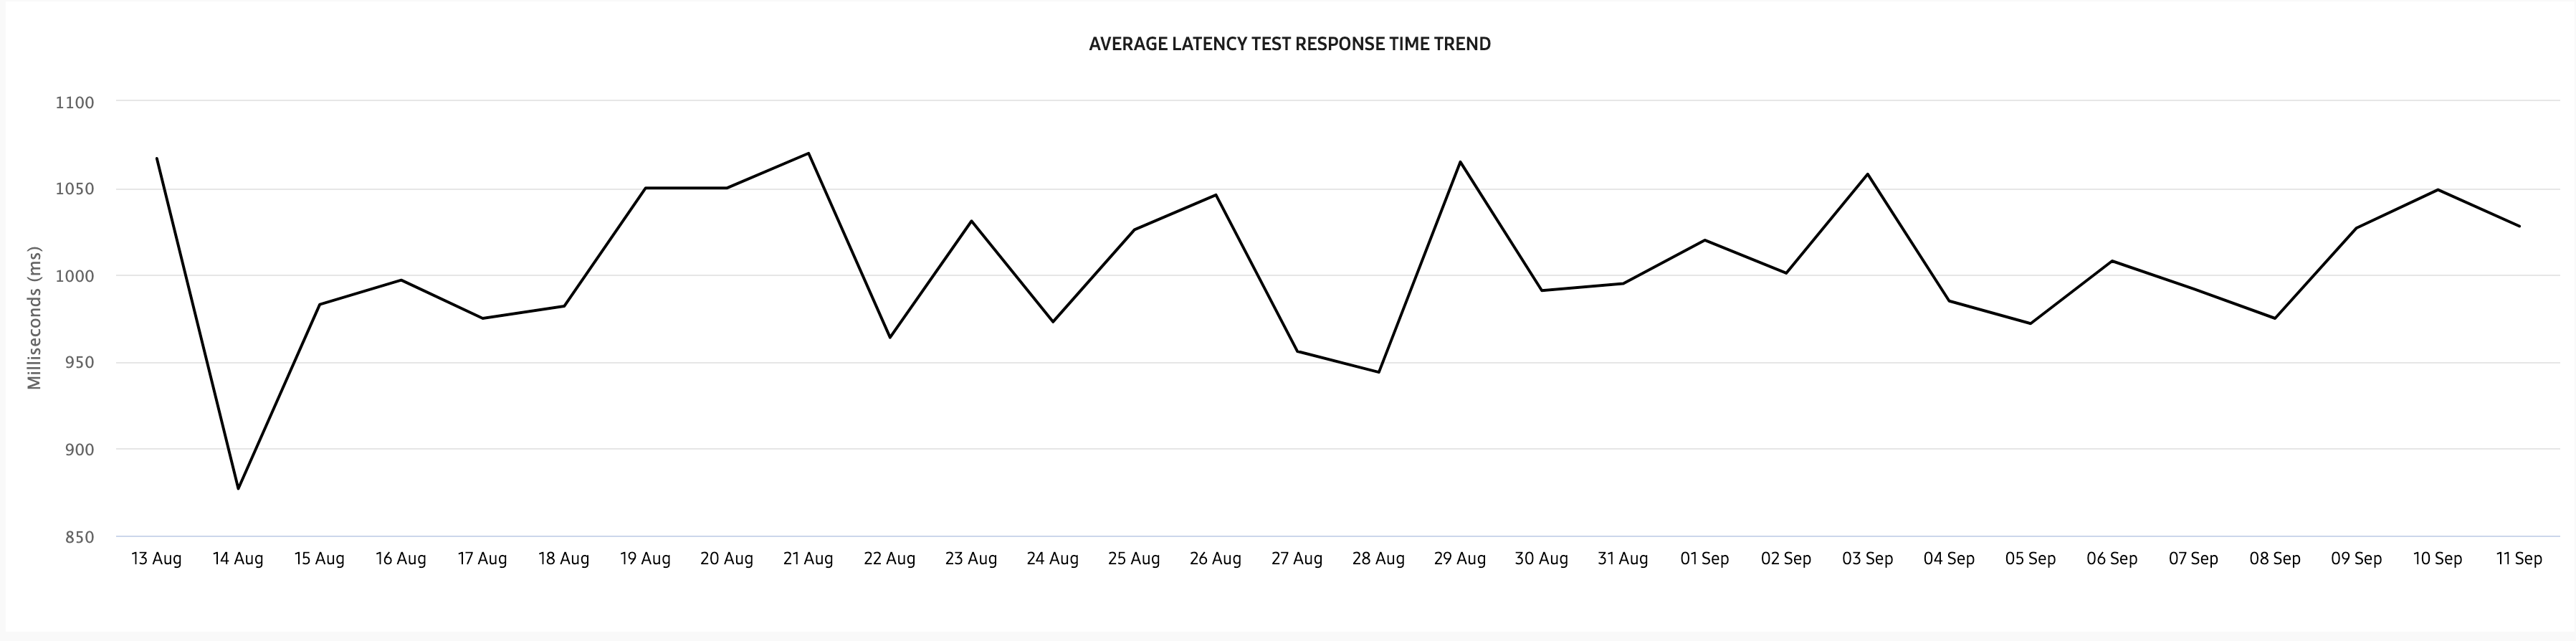 latency drill down average